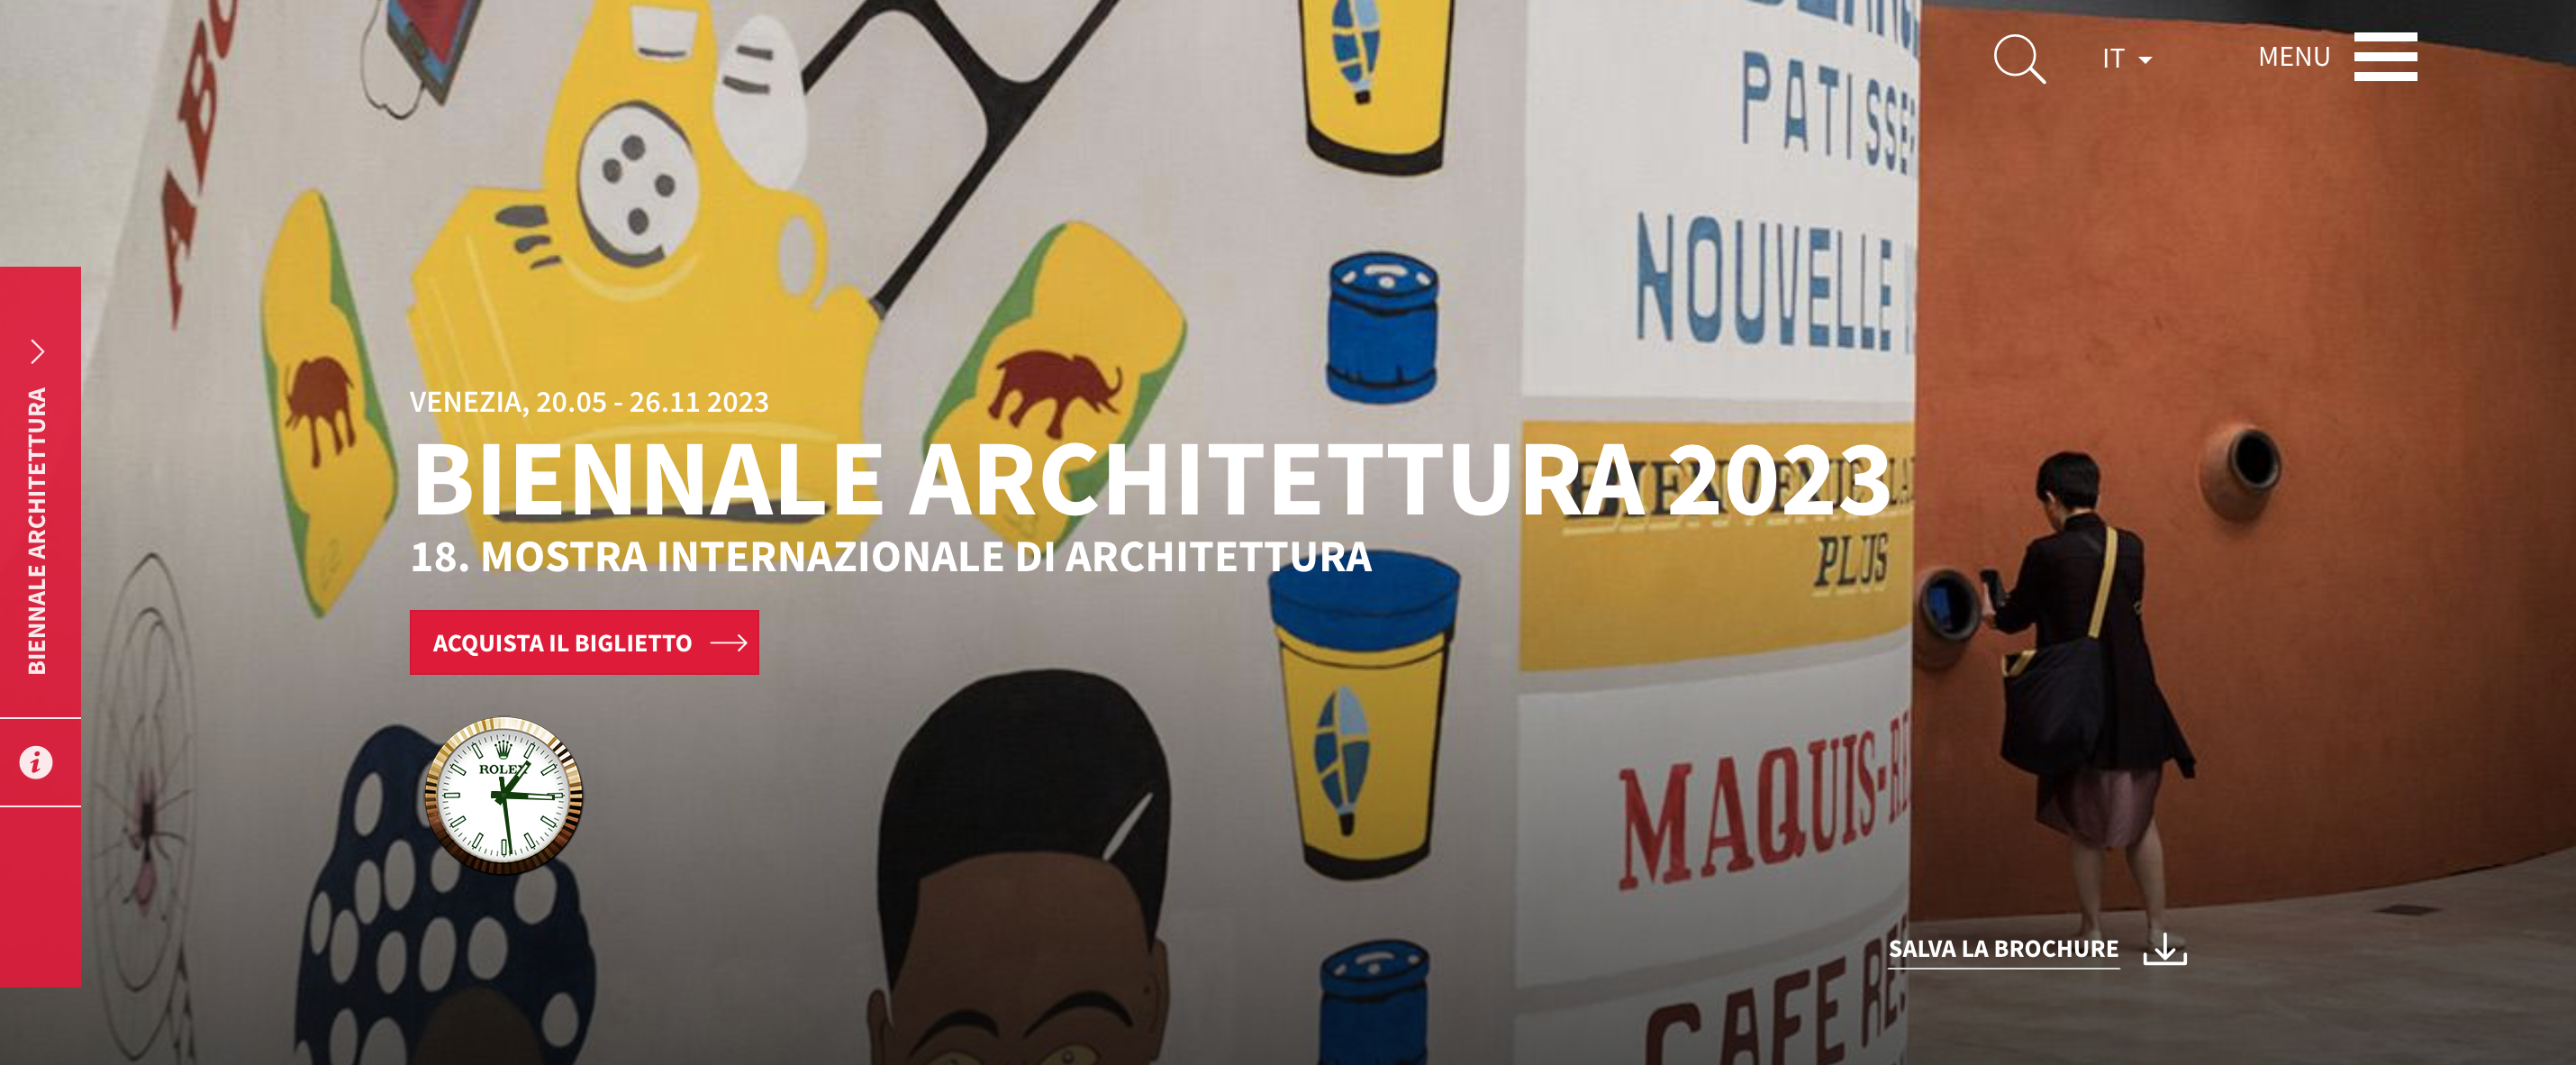 biennale architettura 2023